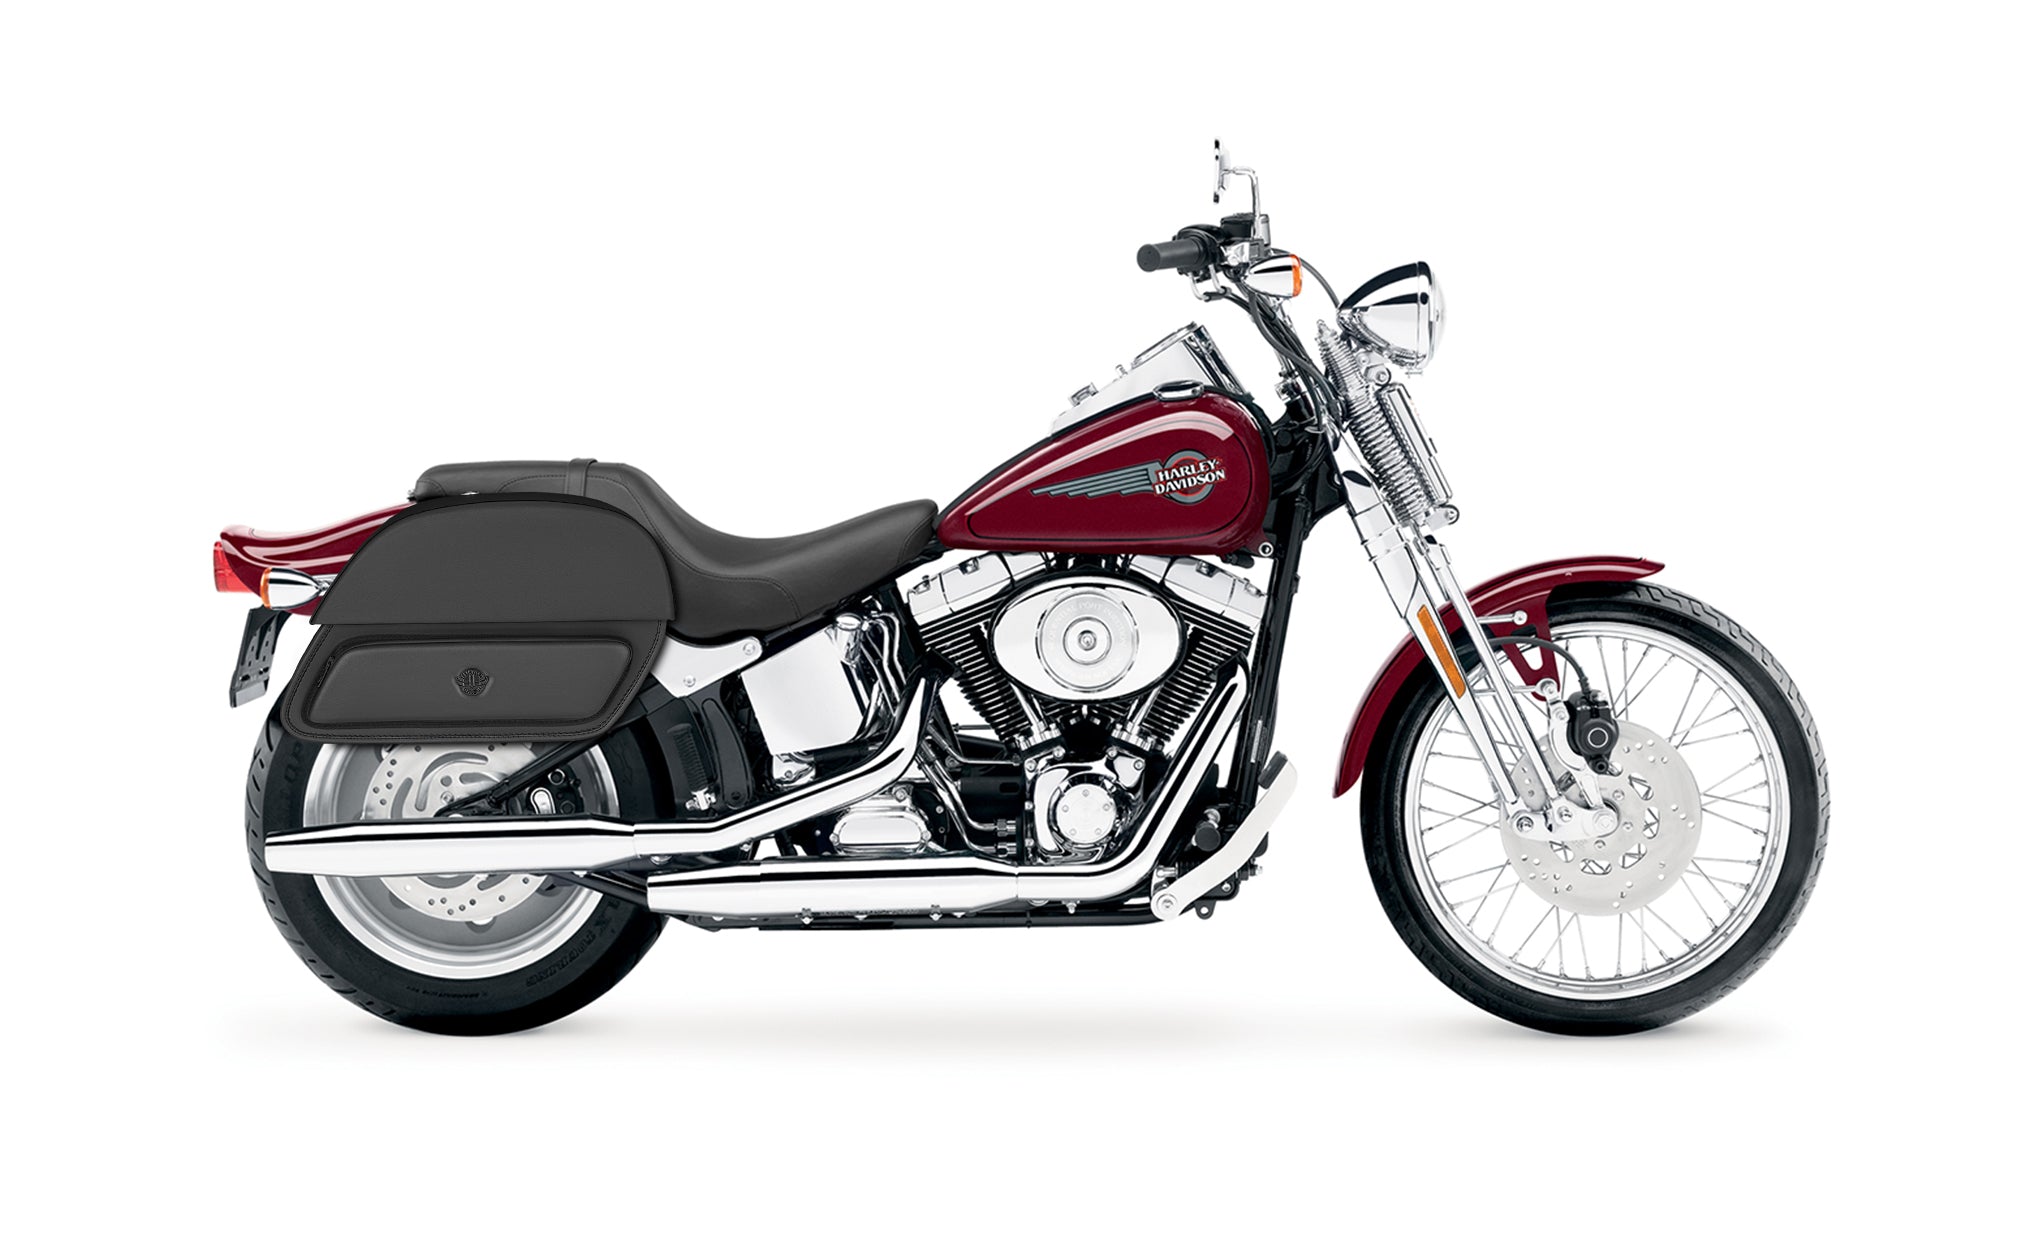 28L - Pantheon Medium Motorcycle Saddlebags for Harley Softail Springer FXSTS/I on Bike Photo @expand